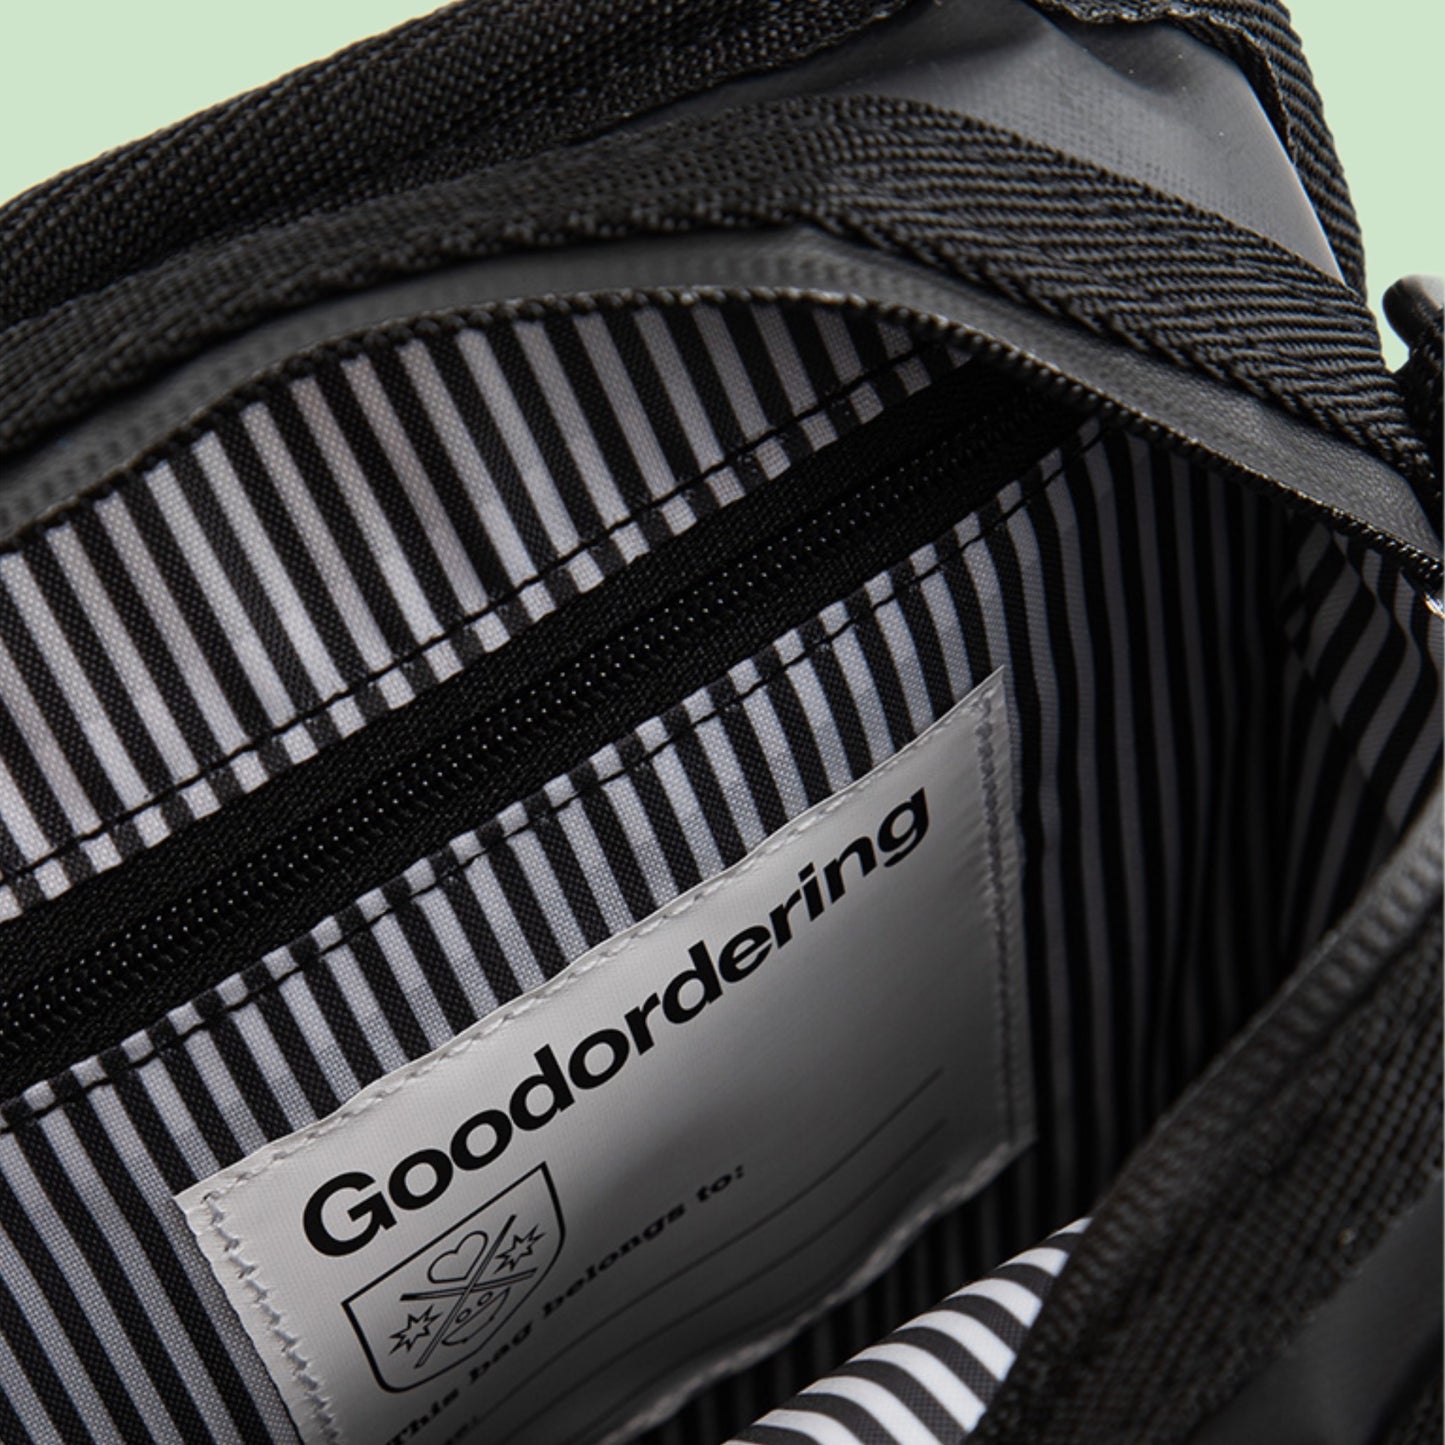 Monochrome Gadget shoulder bag matt black